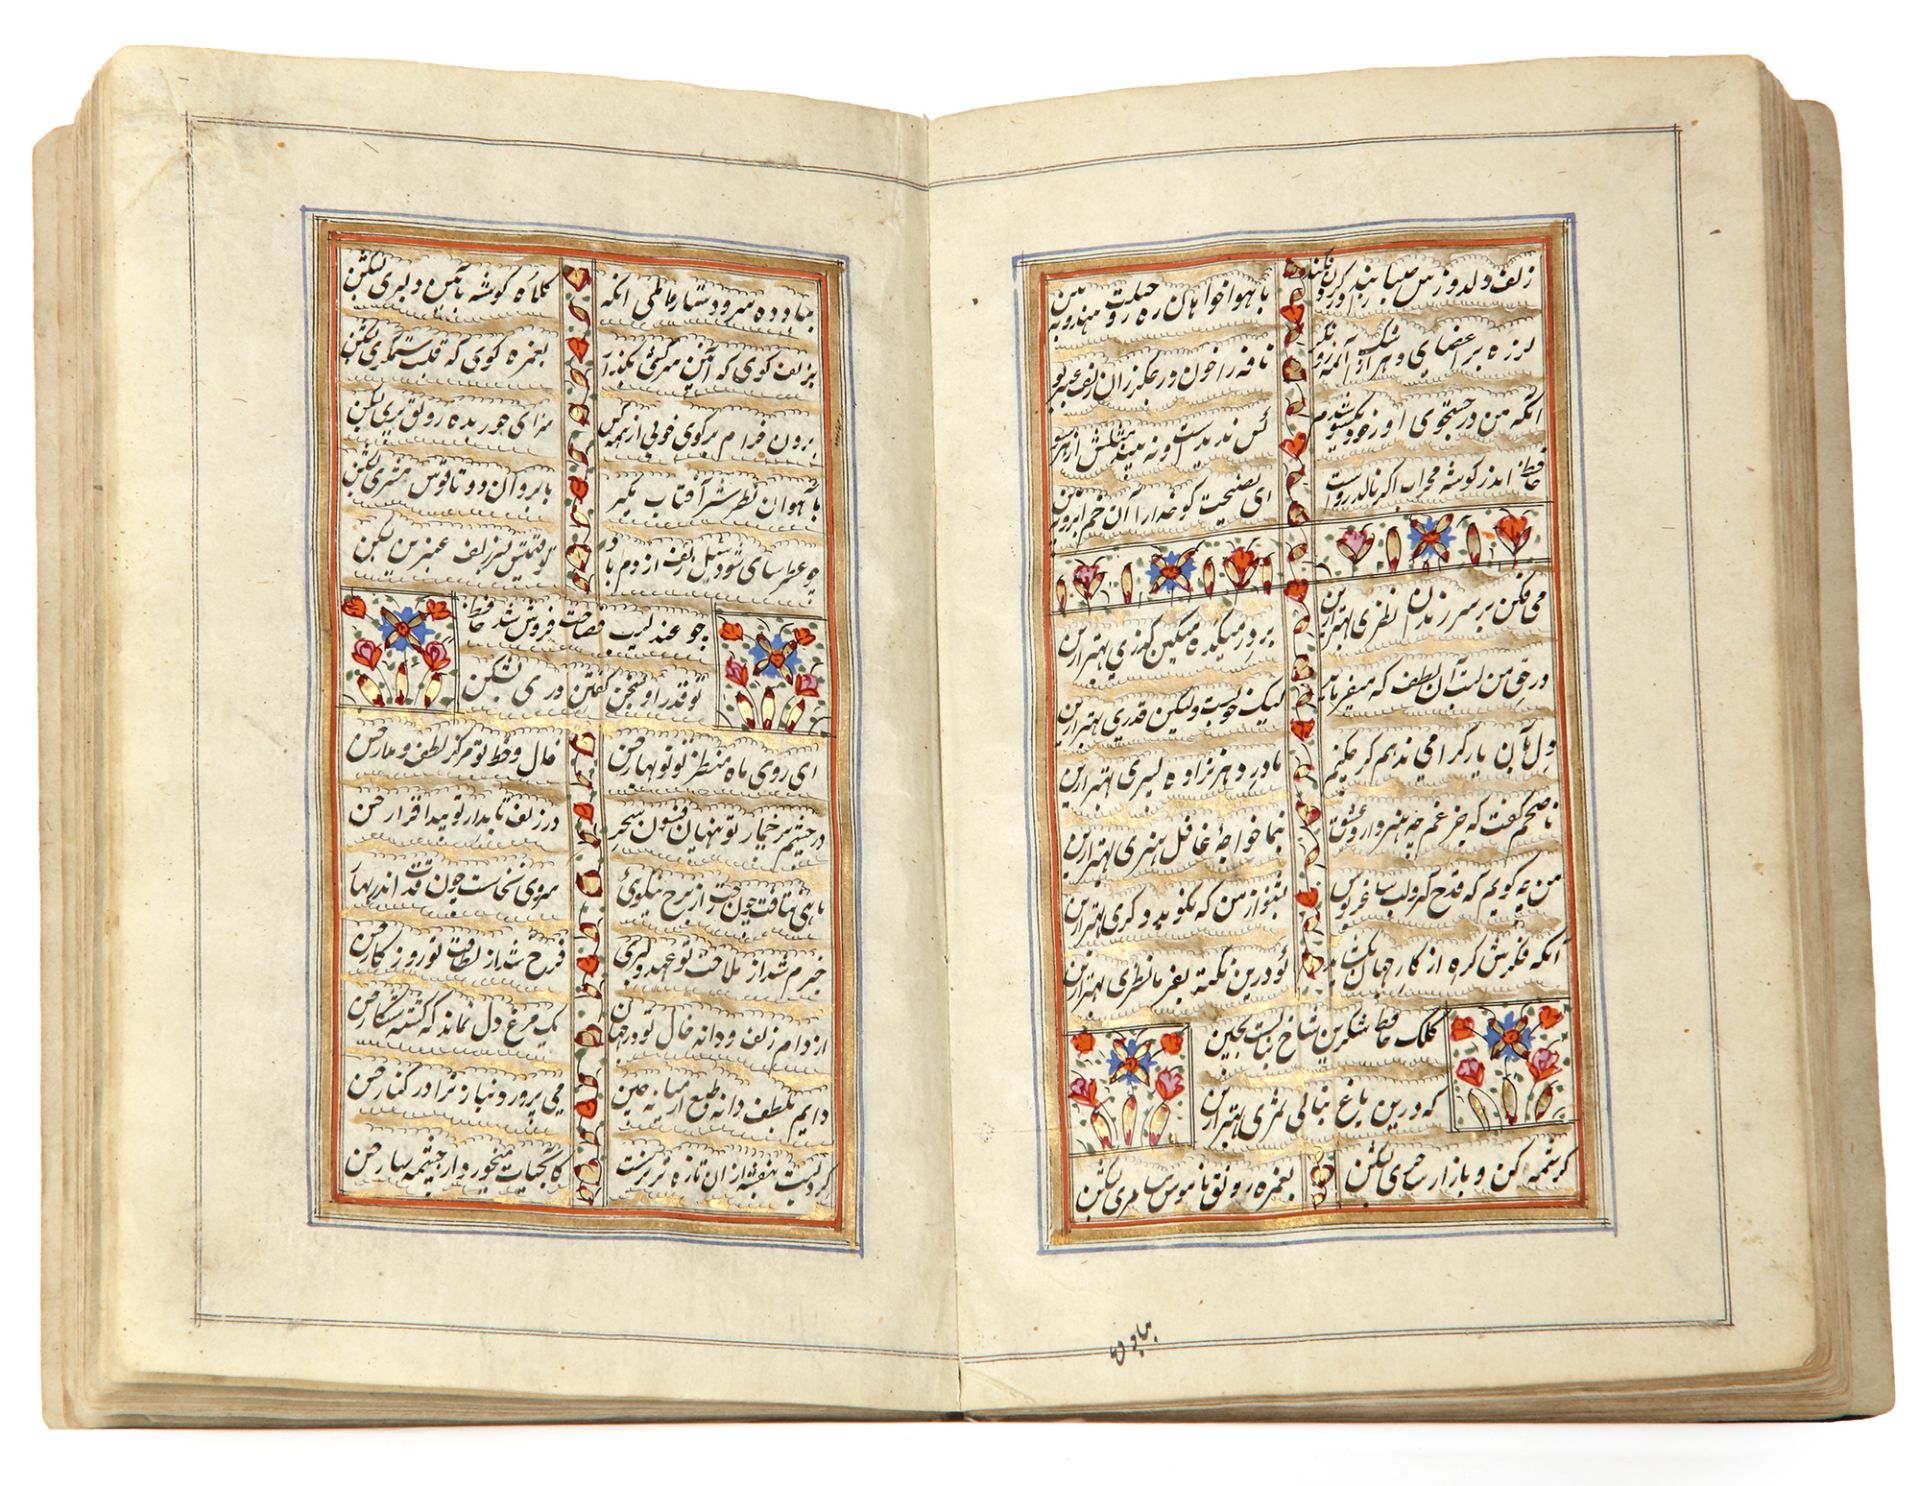 HAFIZ SHAMS AL-DIN SHIRAZI (D.1389 AD), DIWAN, NORTH INDIA KASHMIR, DATED 1231 AH/1815 AD - Image 3 of 4